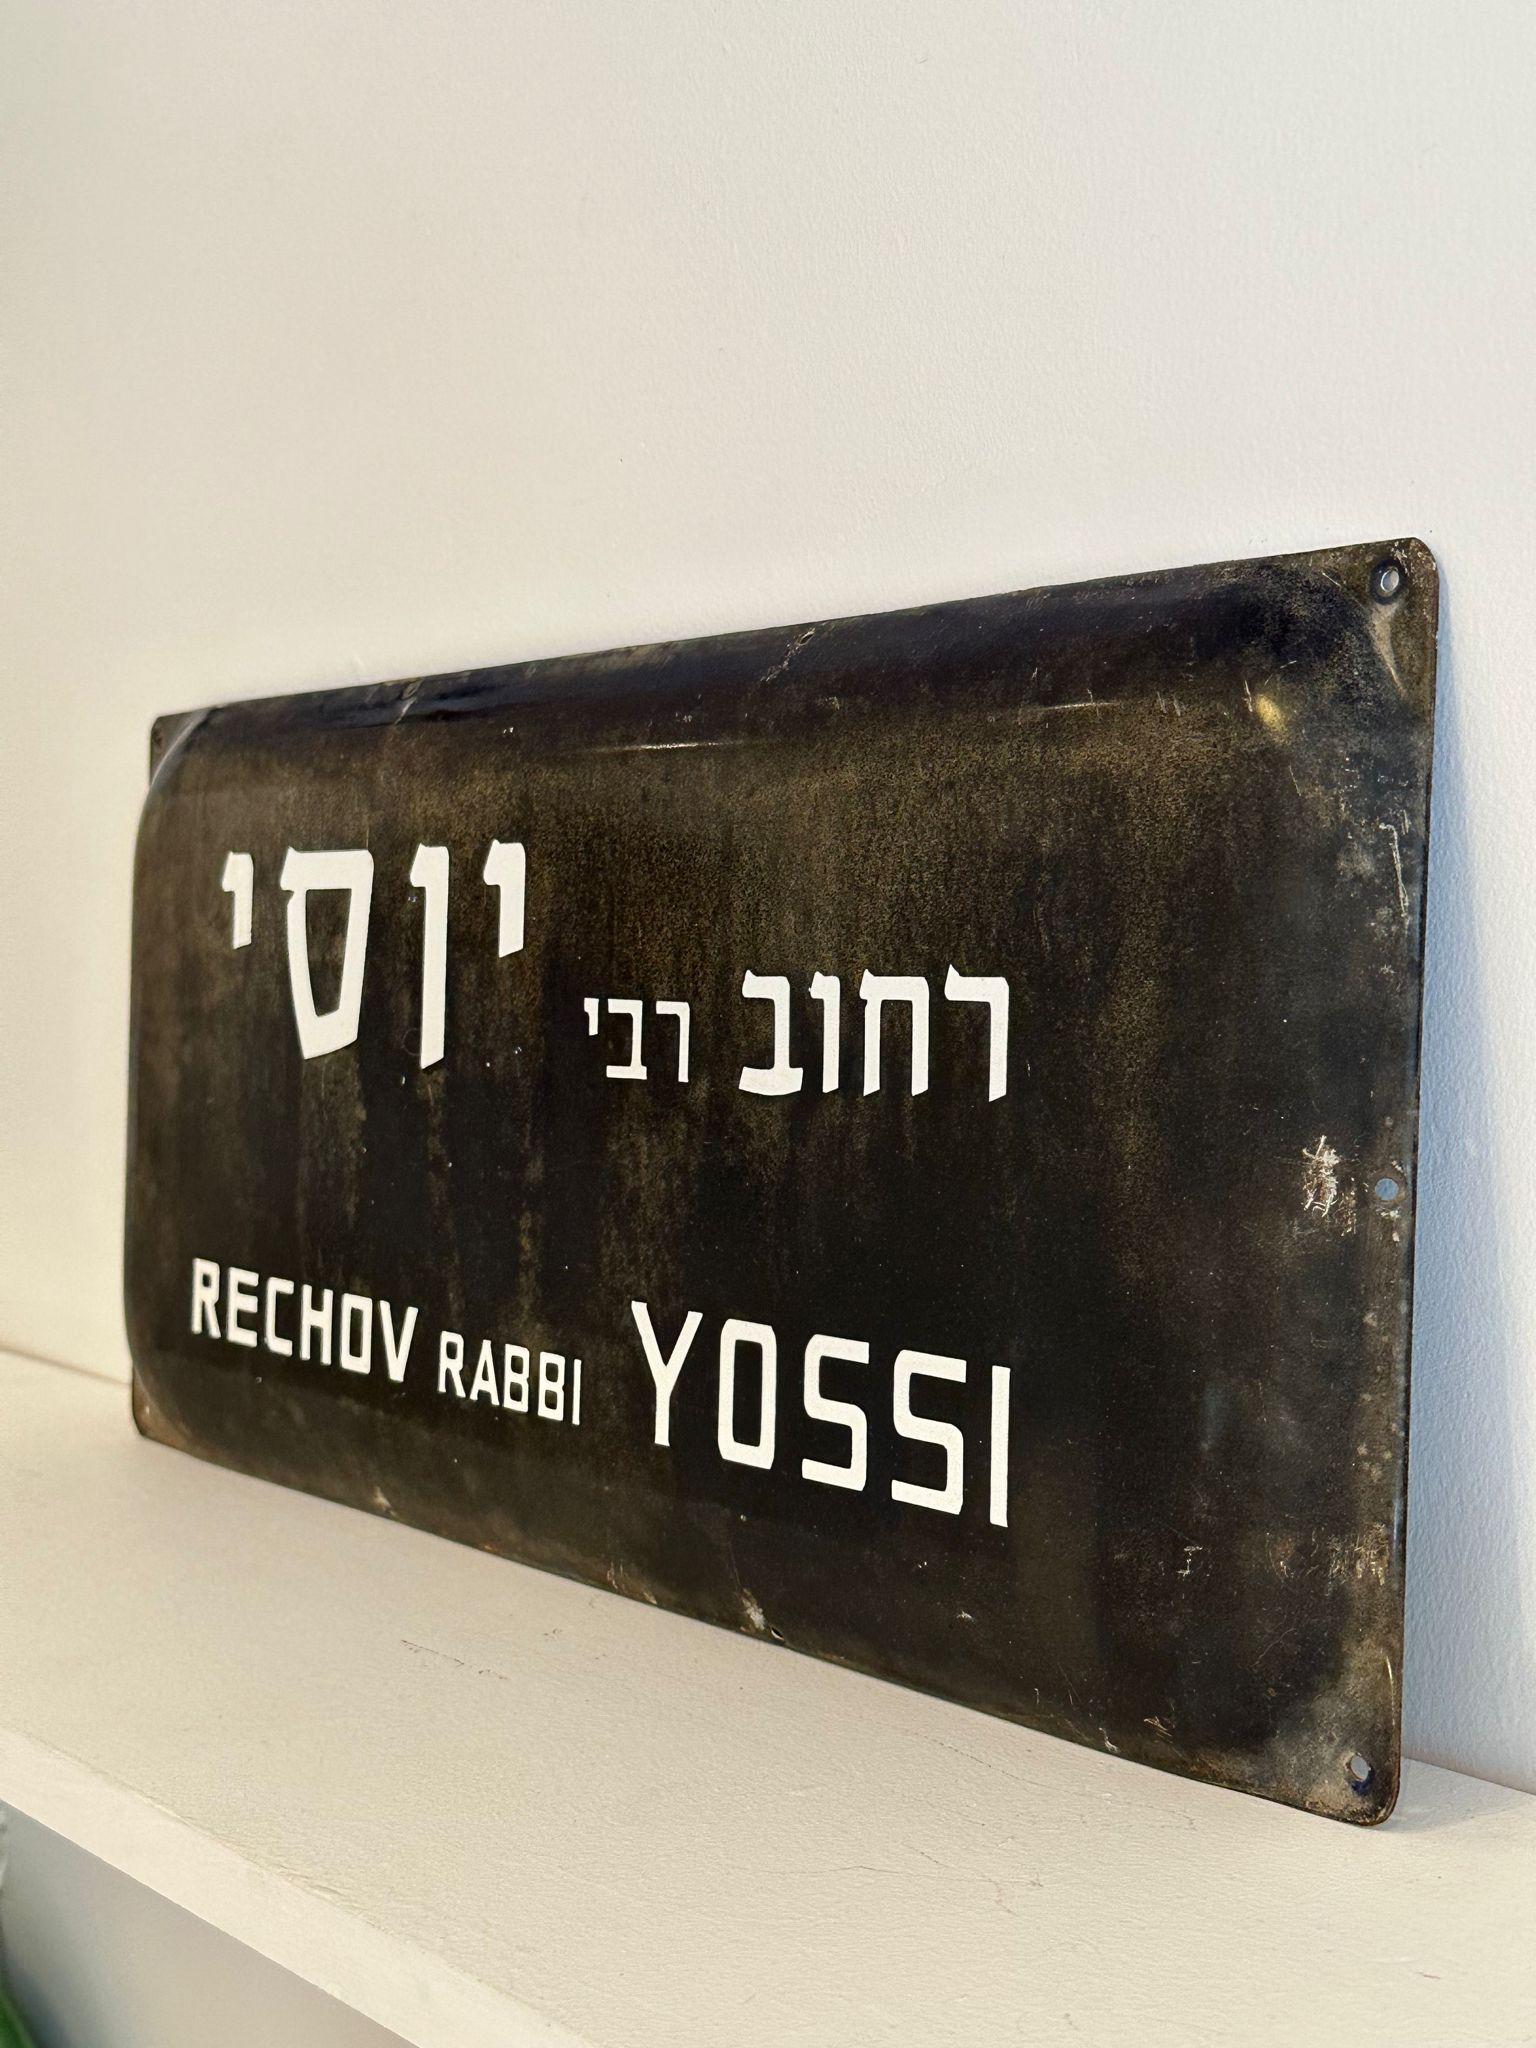 Enameled Mid-20th Century Enamel and Iron Israeli 'Rabbi Yossi' Street Name Sign  For Sale